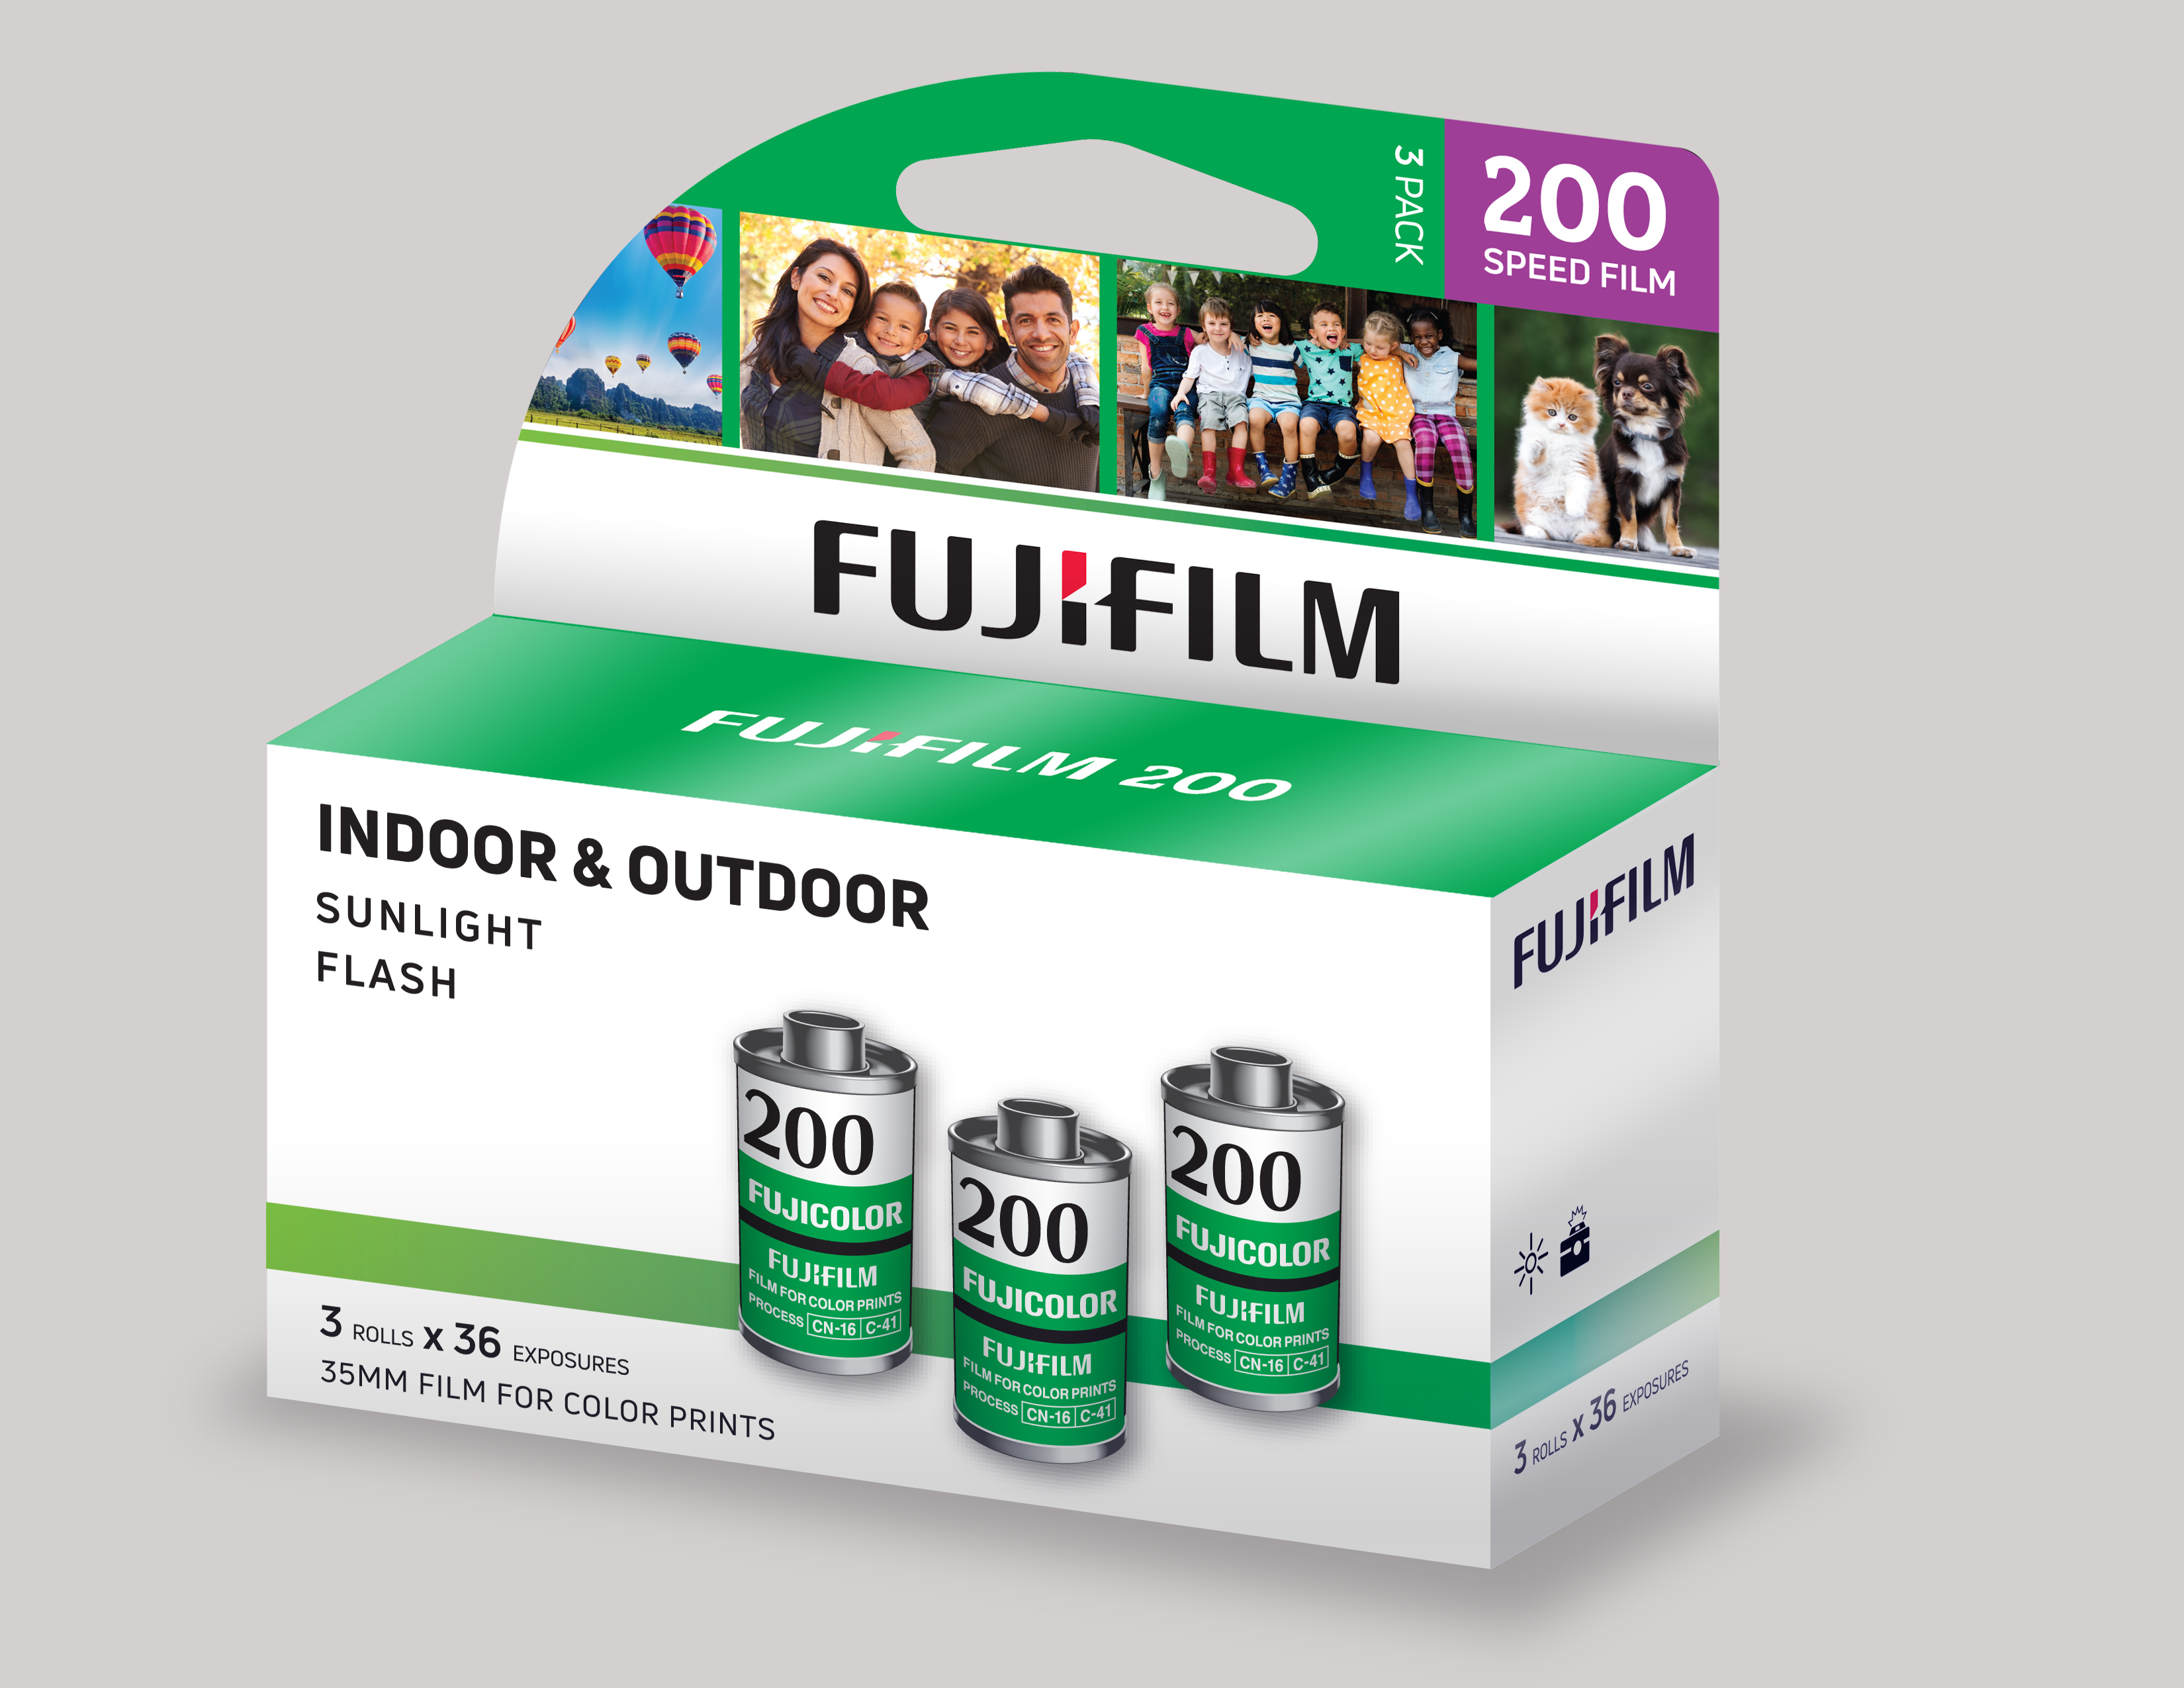 Fujifilm Is Replacing Its 24 Exposure Superia and Fujicolor Rolls with 36 Exposures